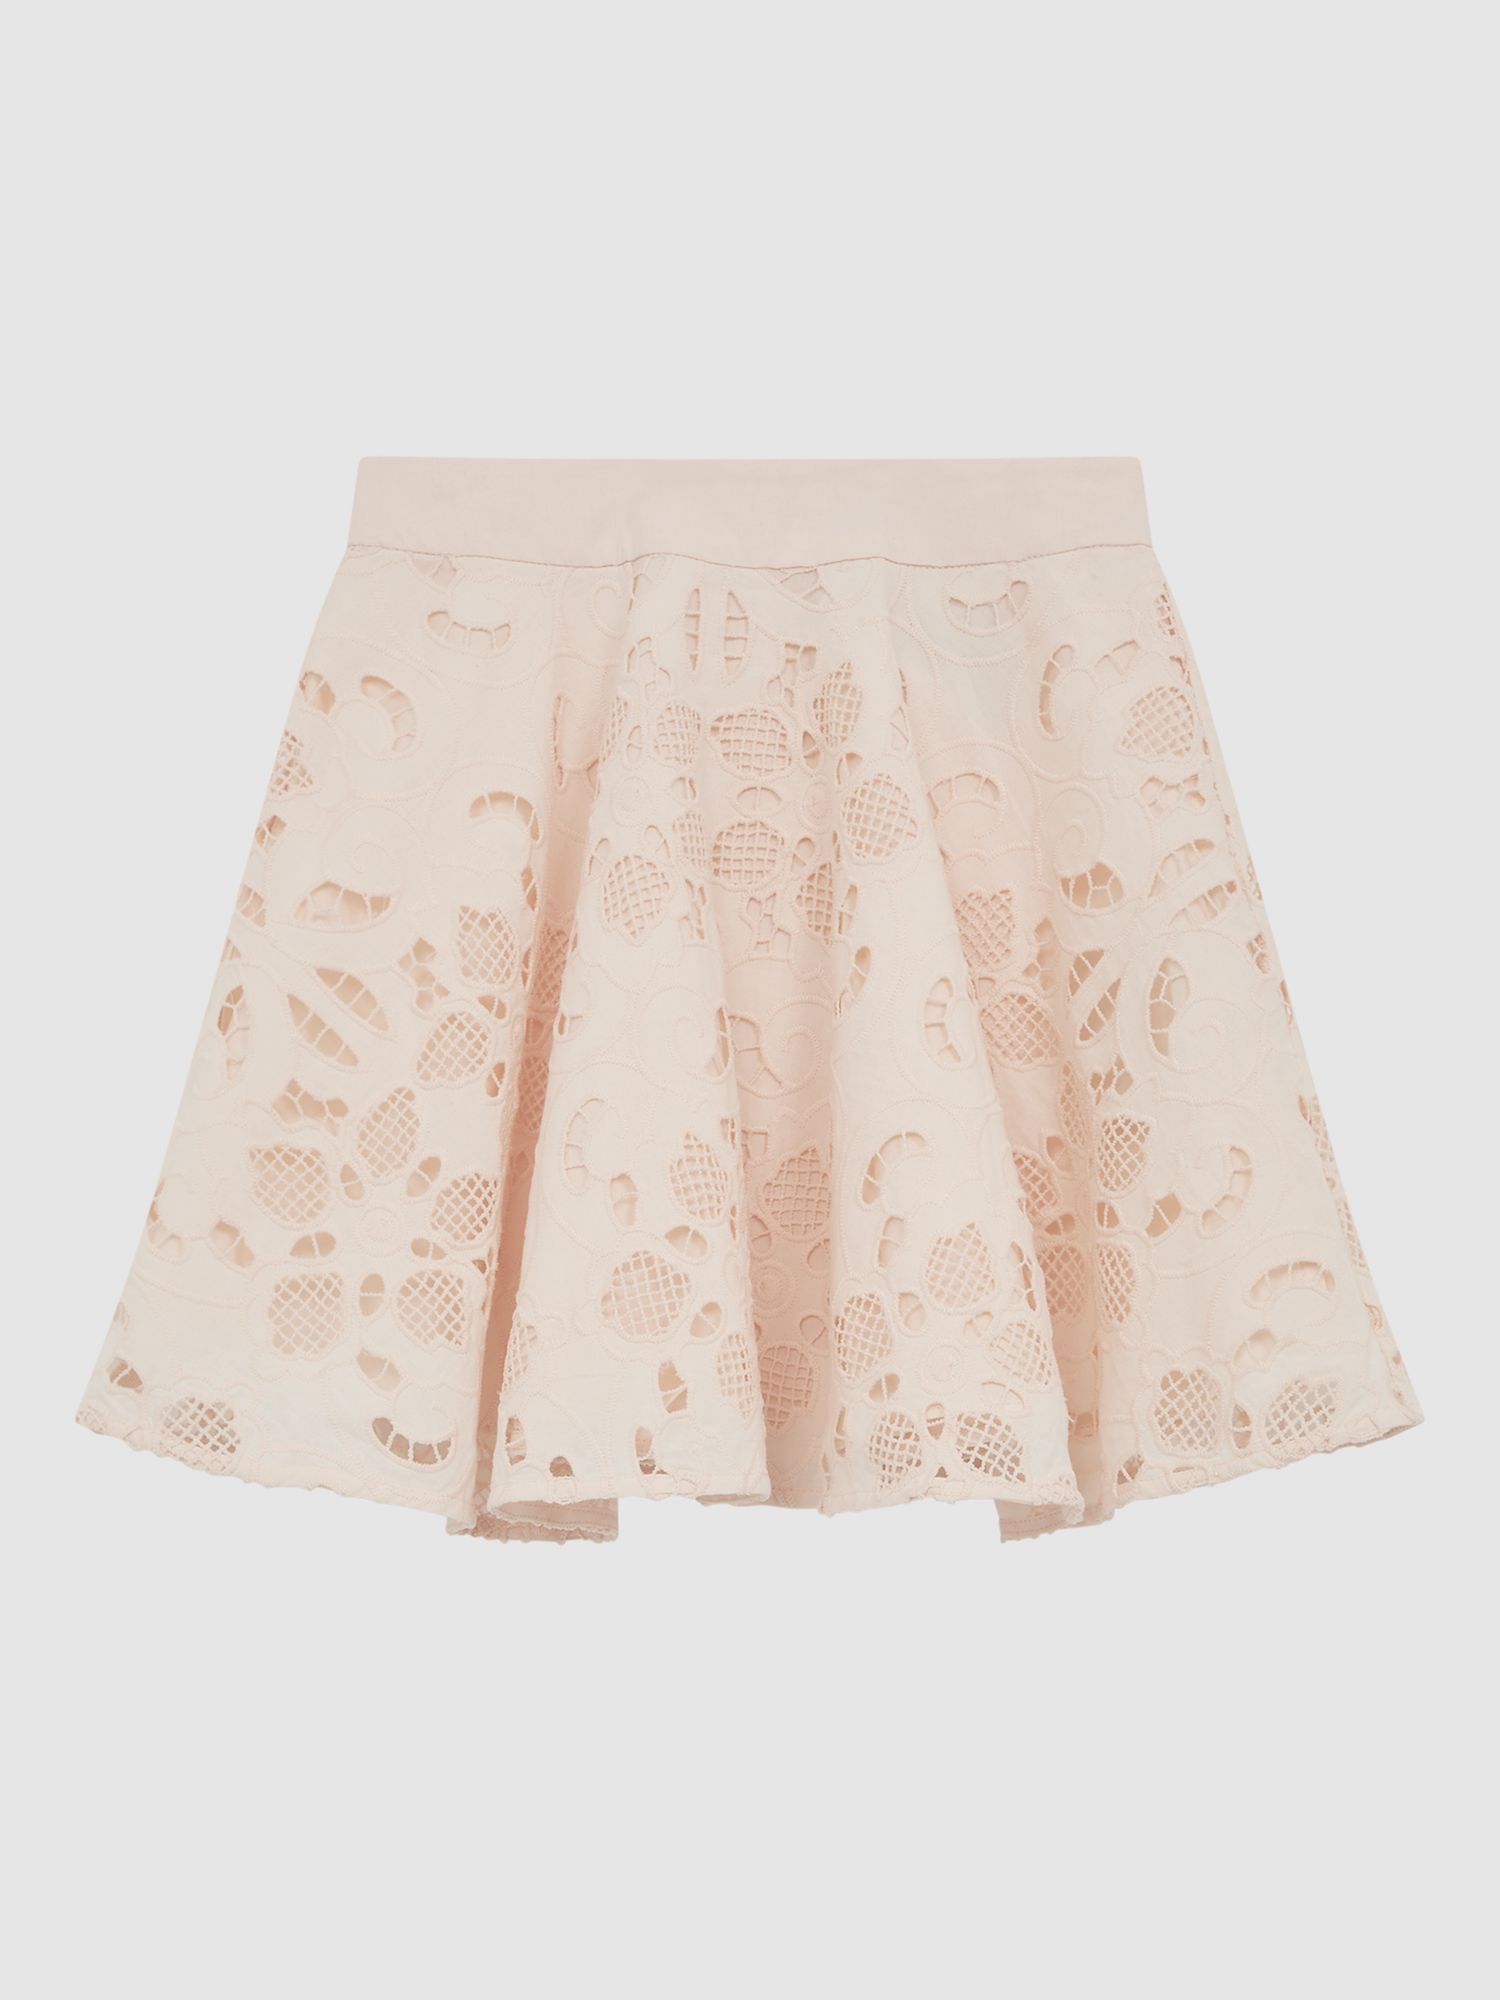 Reiss Kids' Nella Cotton Lace Mini Skirt, Pink, 4-5 years